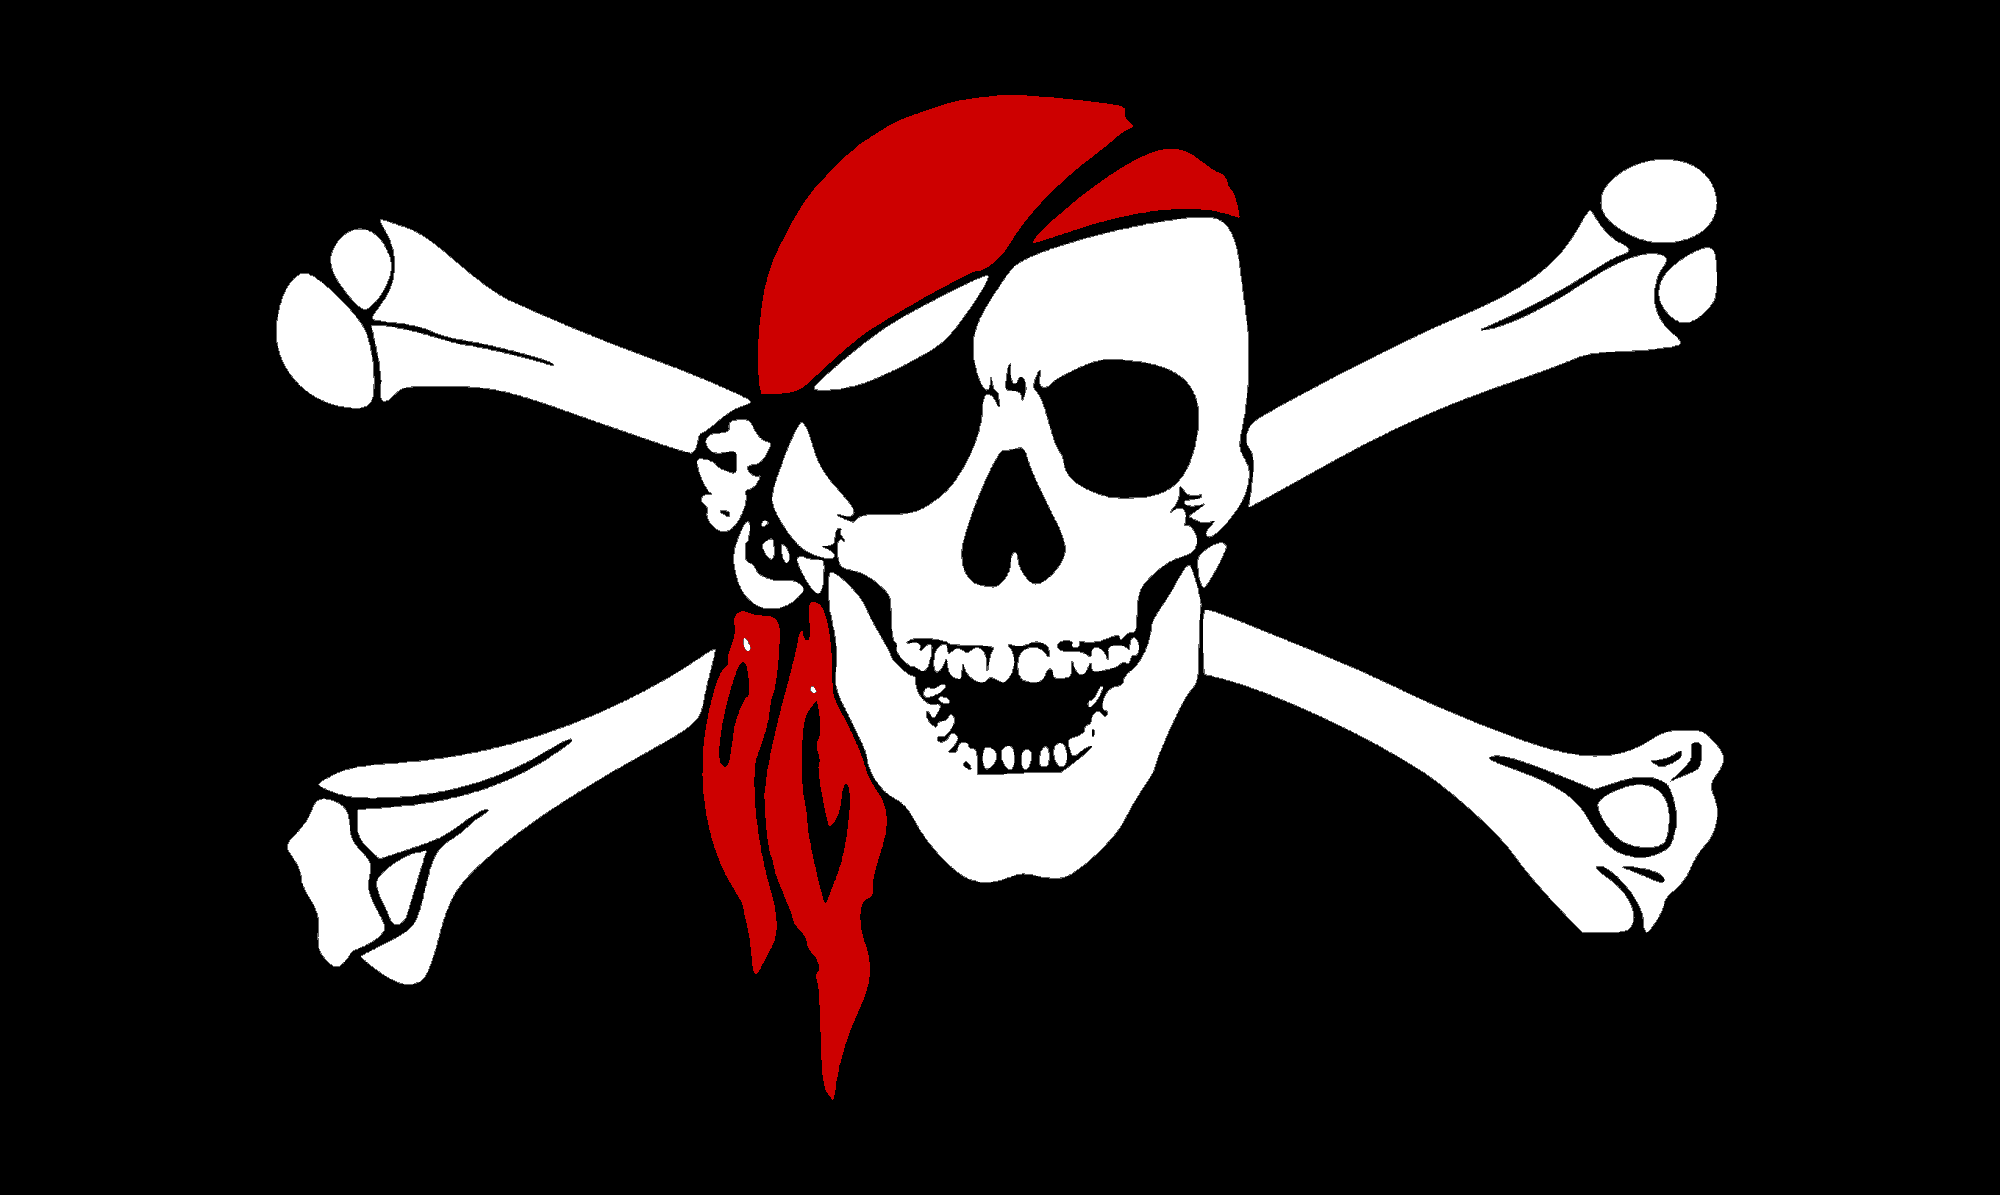 Happy International Talk Like a Pirate Day